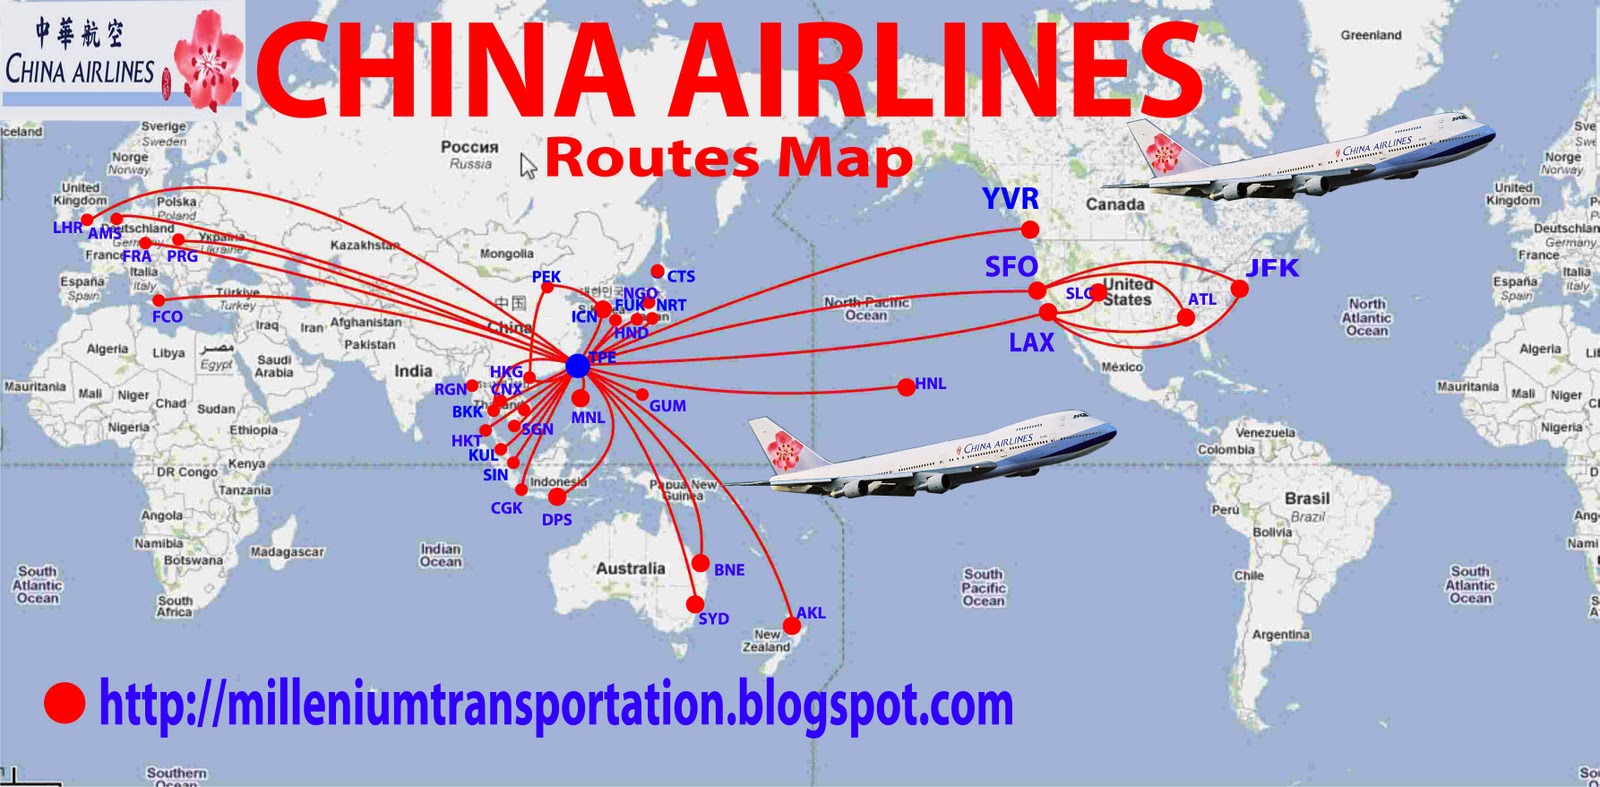 http://2.bp.blogspot.com/-B9BTUHxphvY/Tn1NcSyl9nI/AAAAAAAAAfc/dVtADiK2g9g/s1600/china+Airlines+flight+routes.jpg